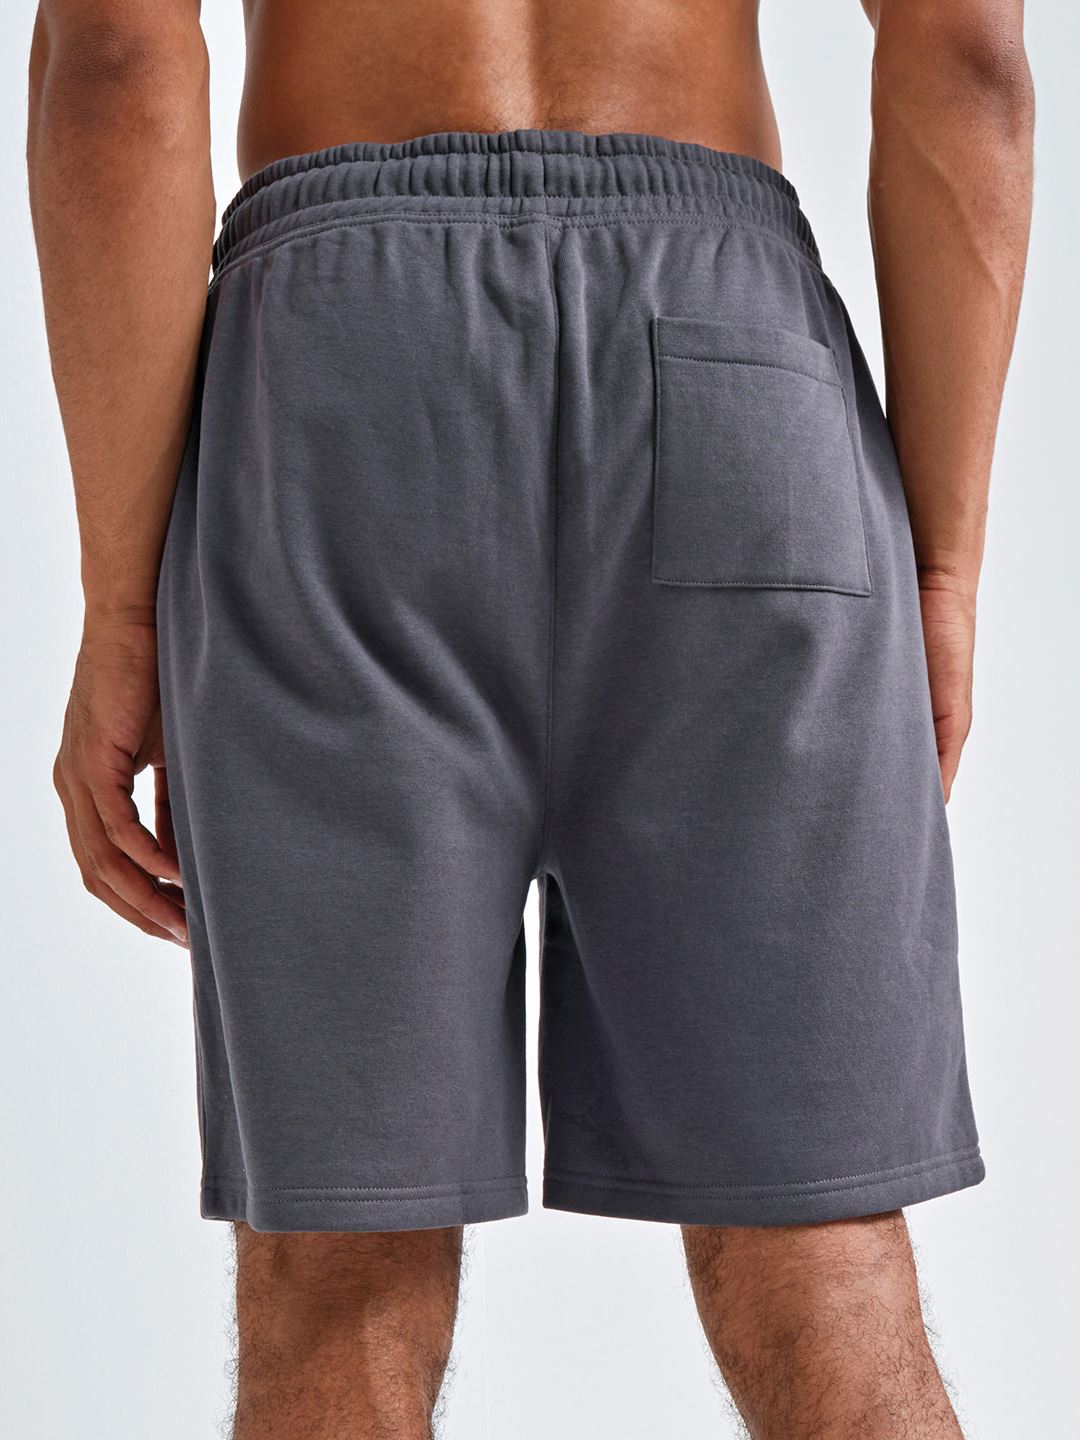 TR058 Men's Tridri® Jogger Shorts Image 3